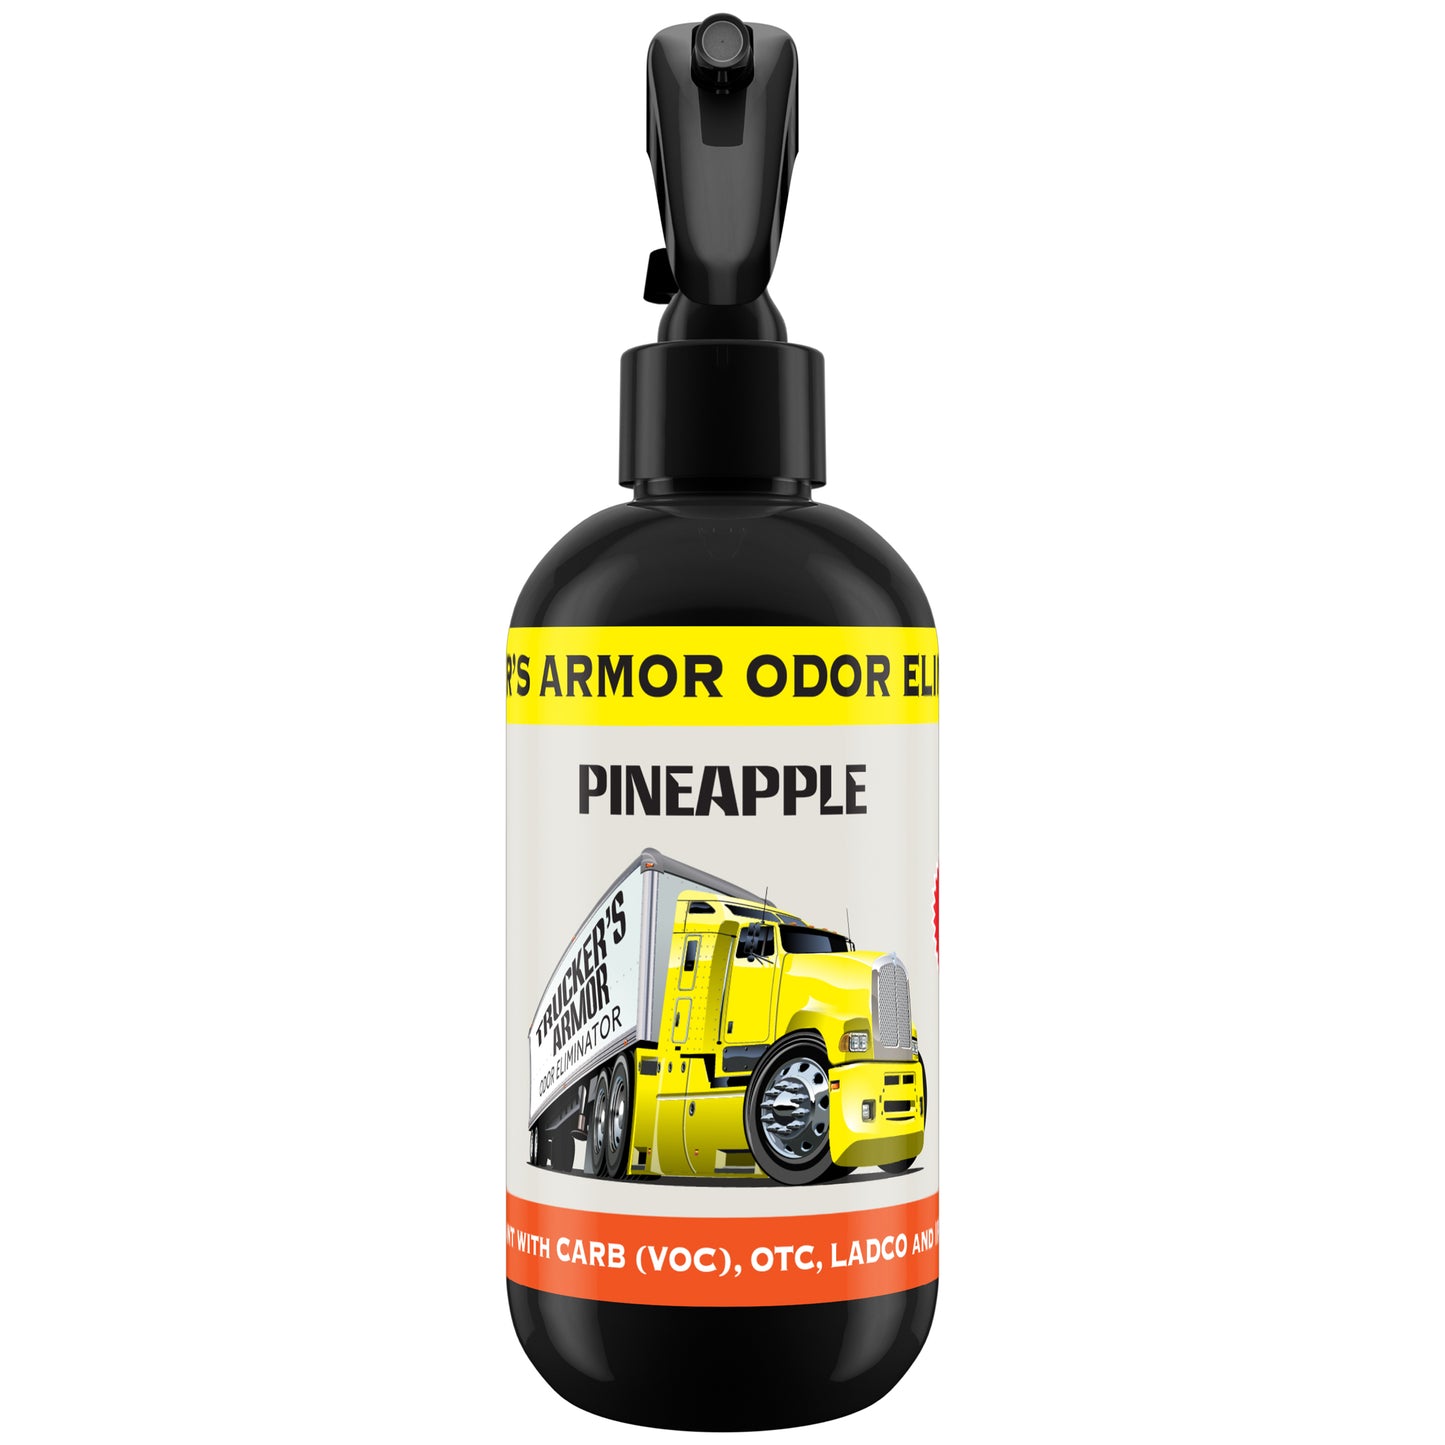 Trucker's Armor Odor Eliminator - Pineapple Scent